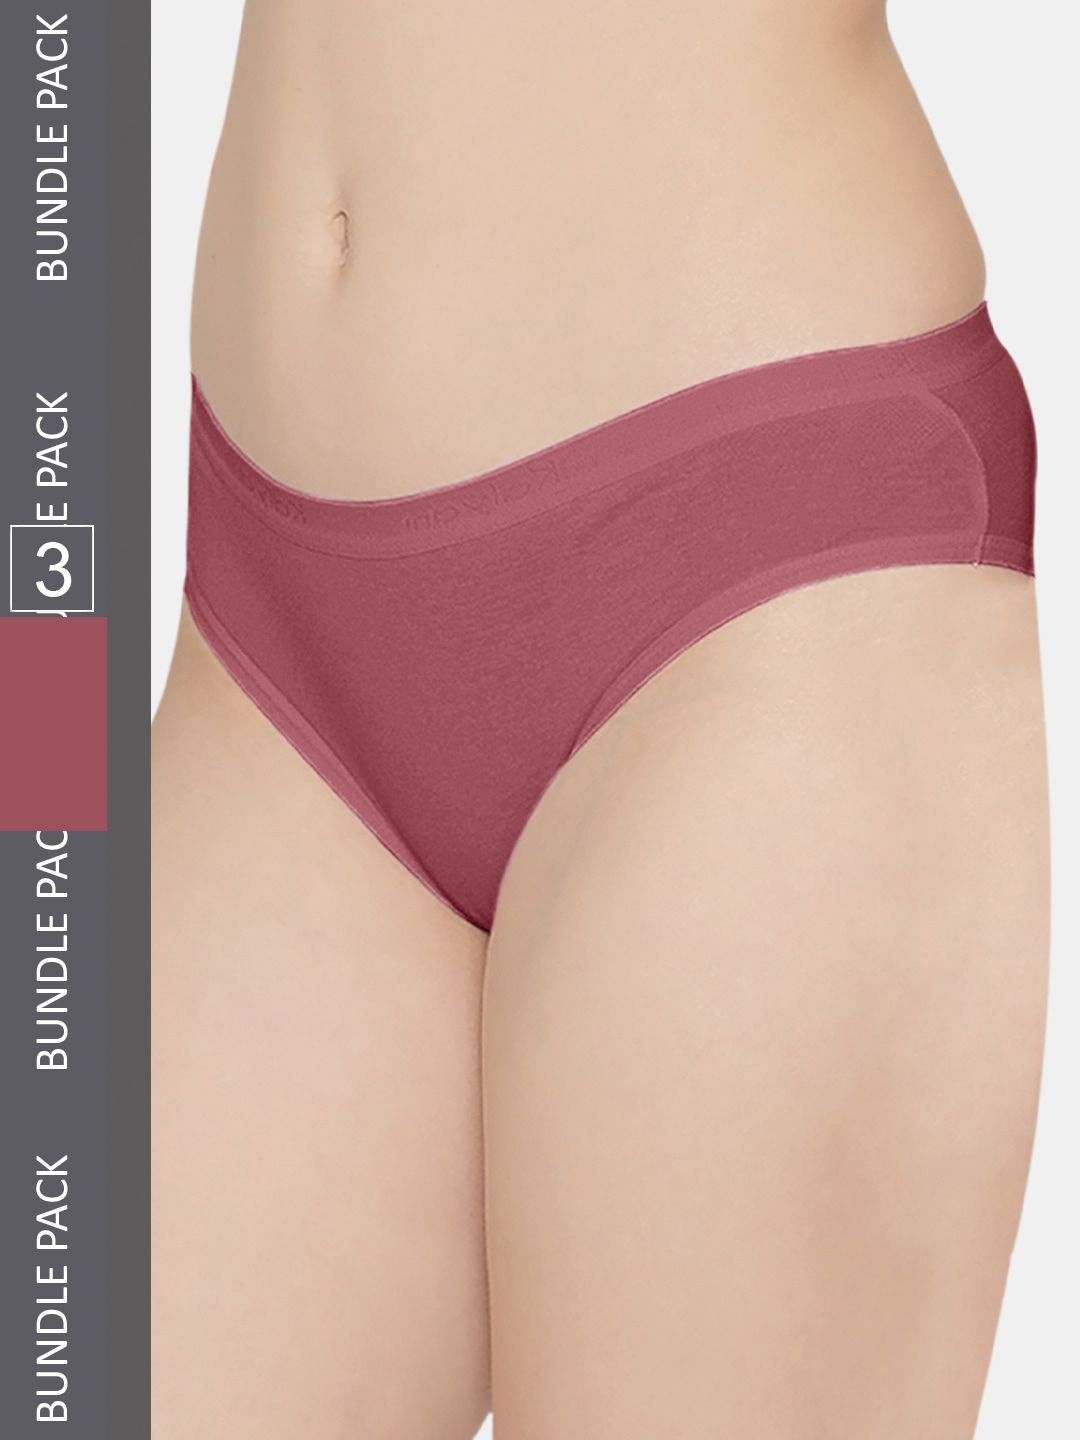 Buy MYYNTI Women's Seamless Cotton Panties Underwear Briefs Ladies